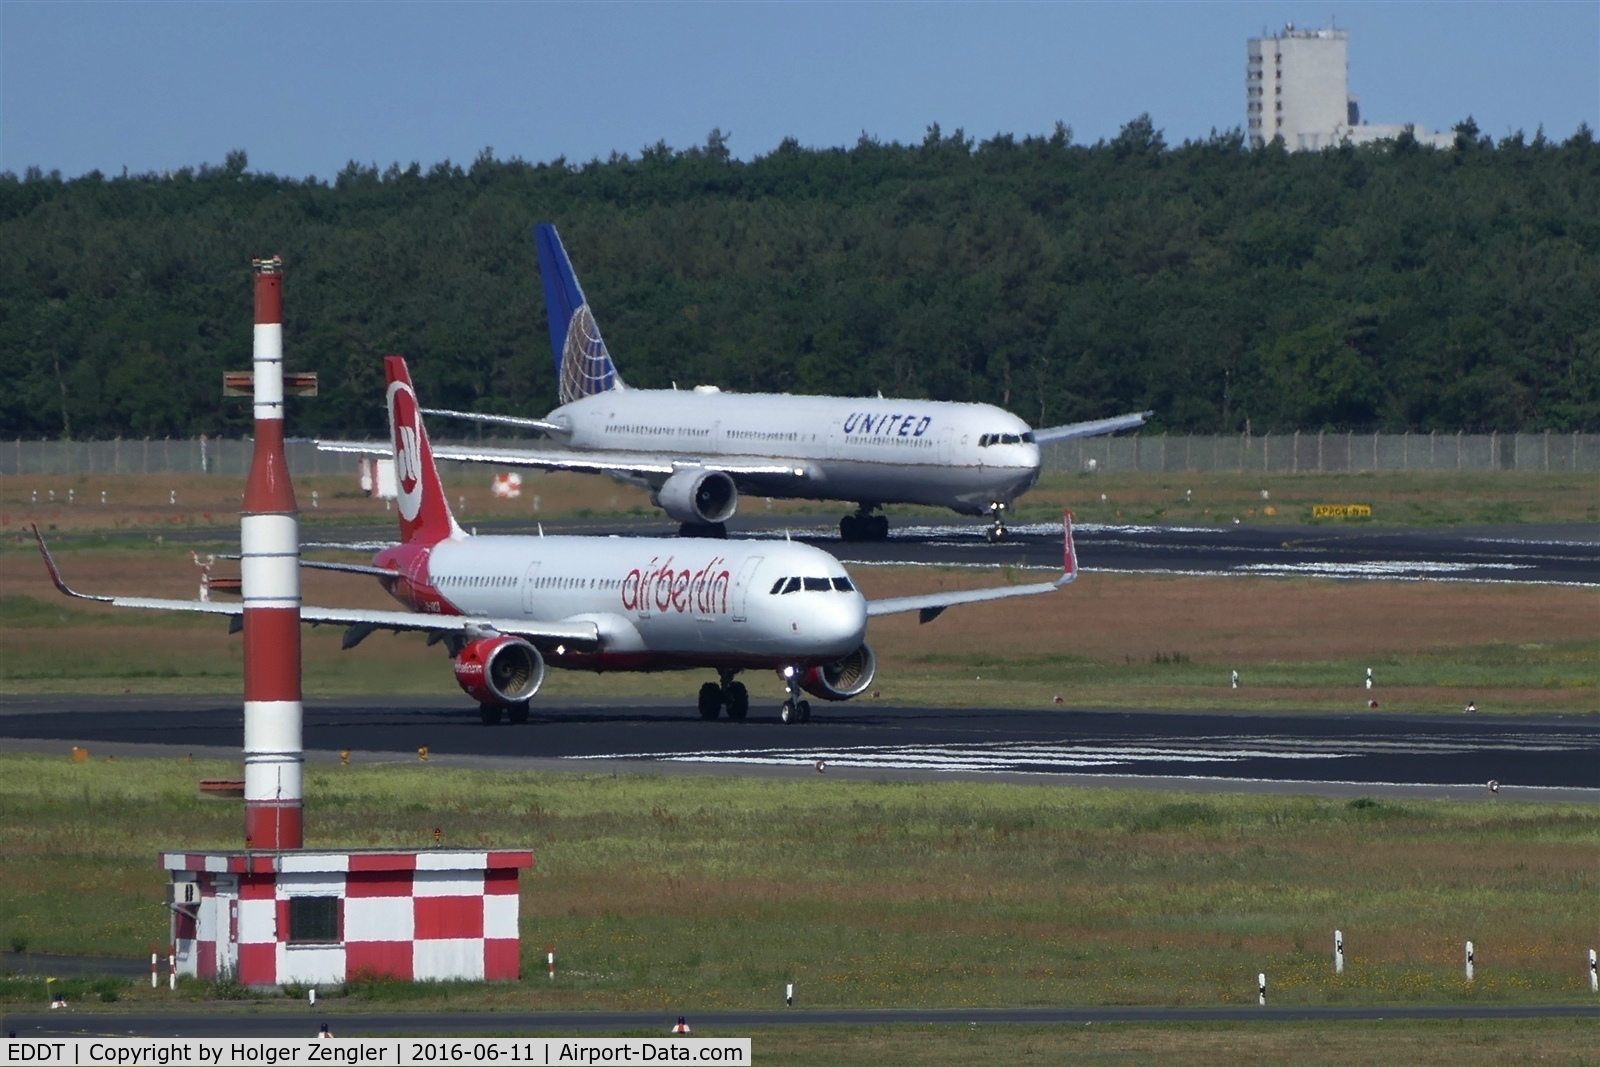 Tegel International Airport (closing in 2011), Berlin Germany (EDDT) - TXL waving good bye tour no.4 since 2011